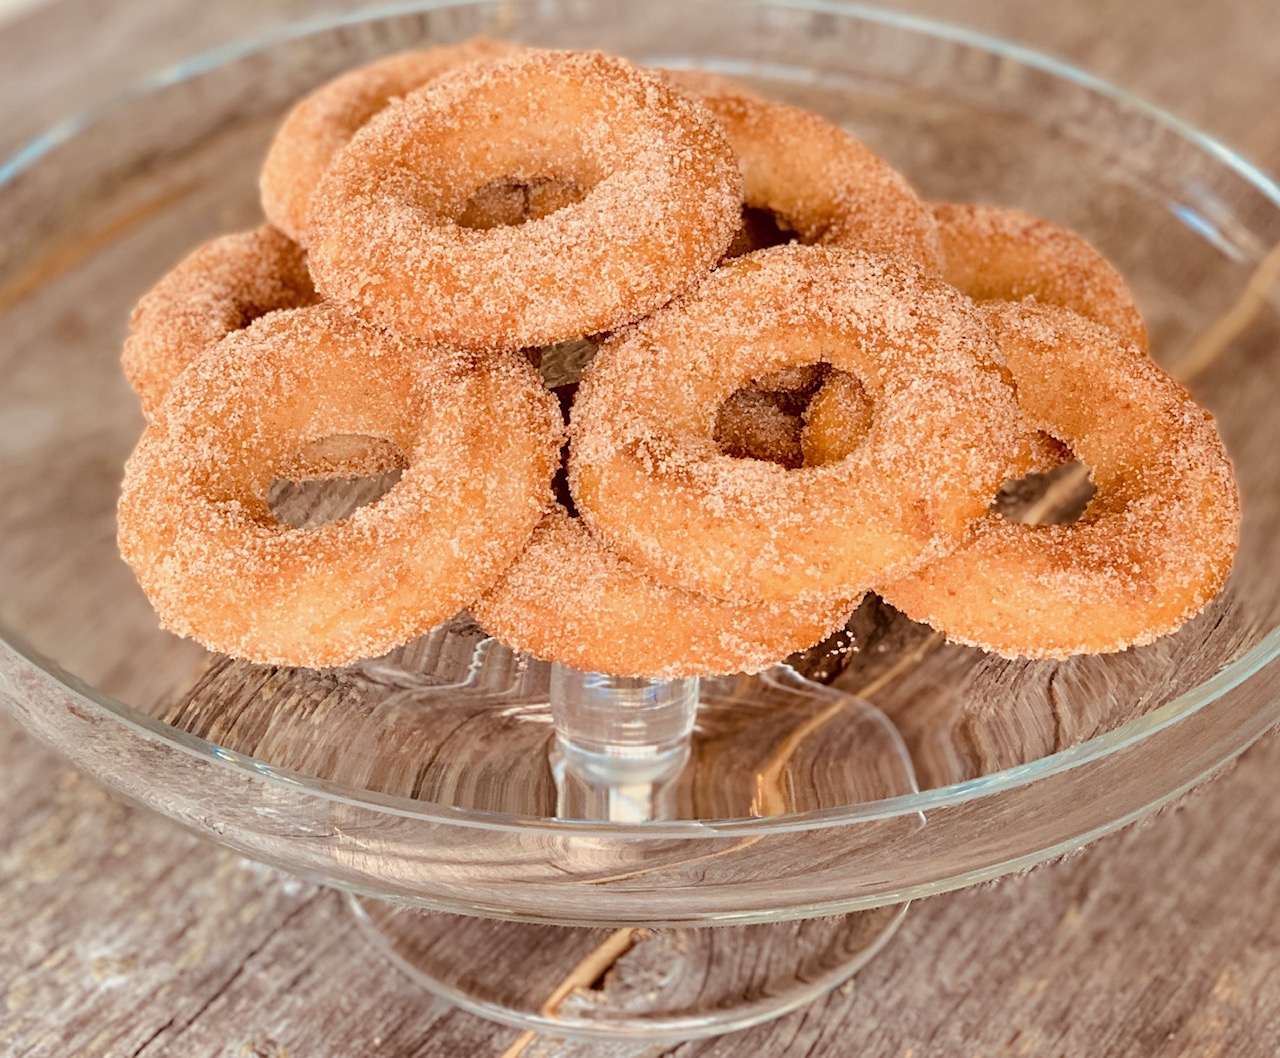 Baked Churro Donuts with Cinnamon Sugar